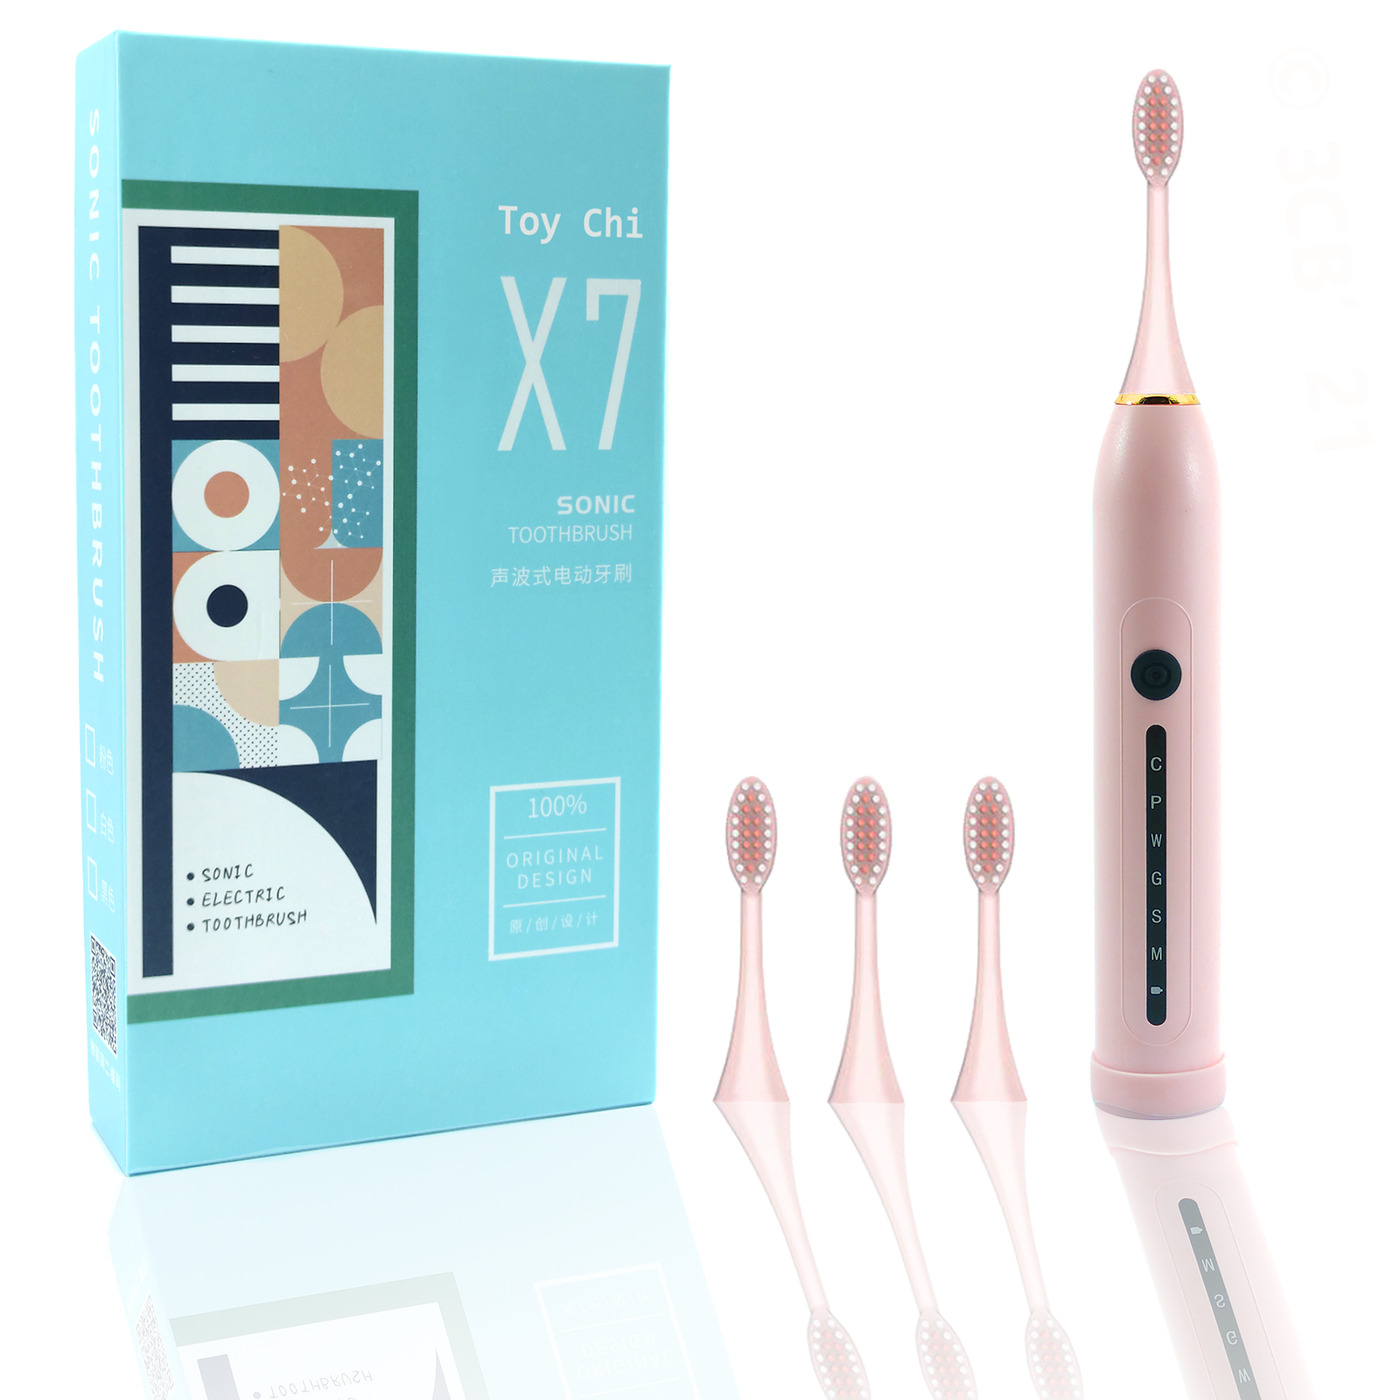 Электрическая зубная щетка ультразвуковая Toy Chi X7 SONIC Toothbrush, розовая электрическая зубная щетка colgate 360 sonic древесный уголь на батарейках мягкая